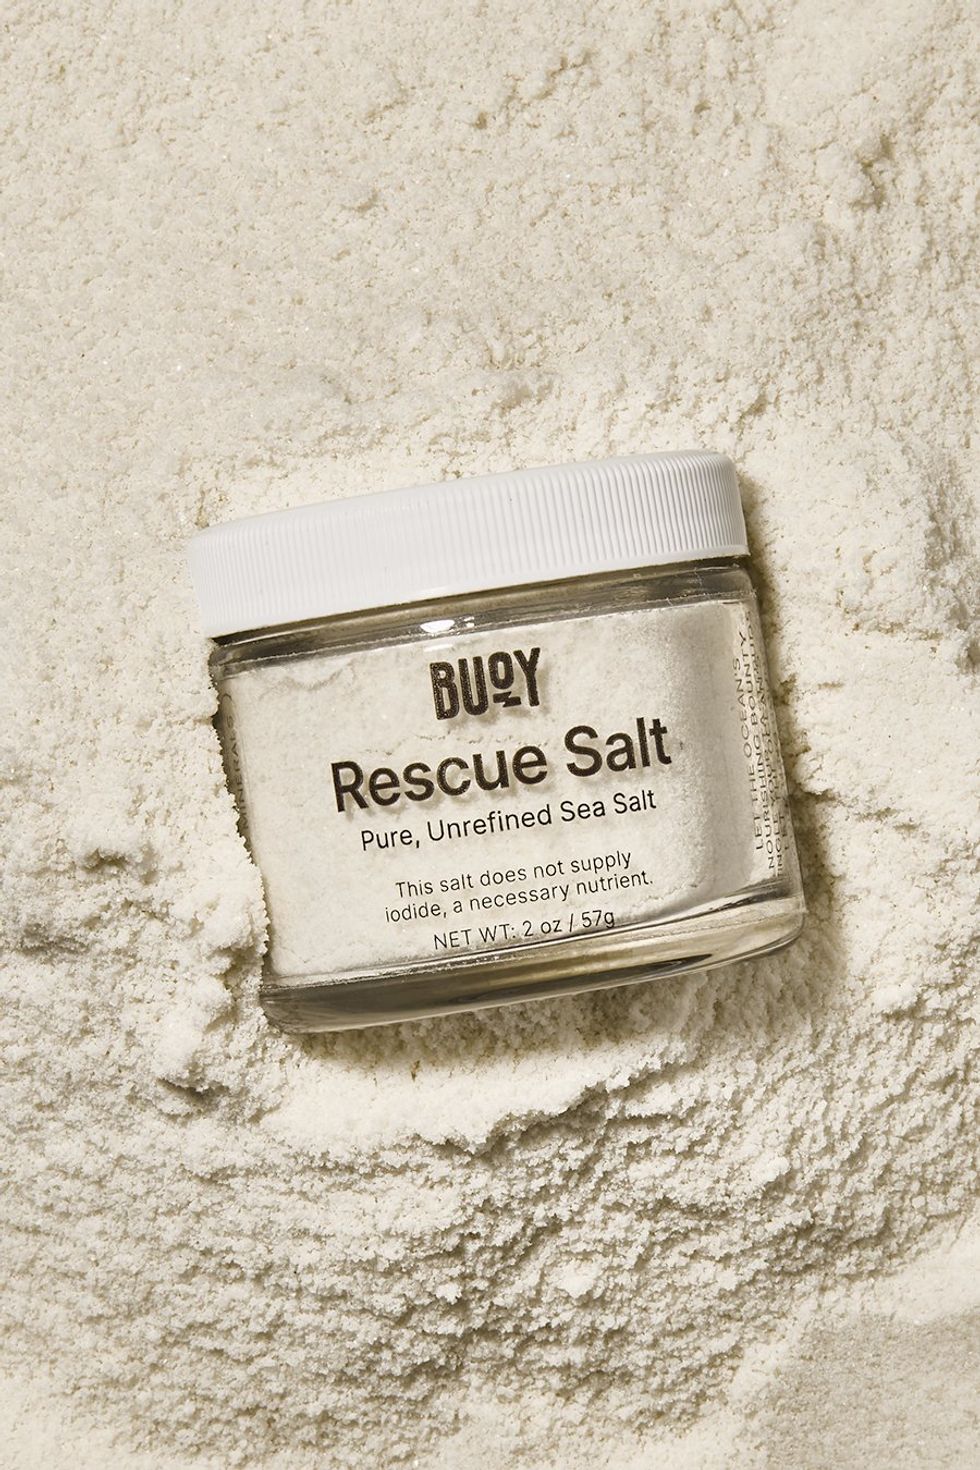 Rescue Salt from Bouy